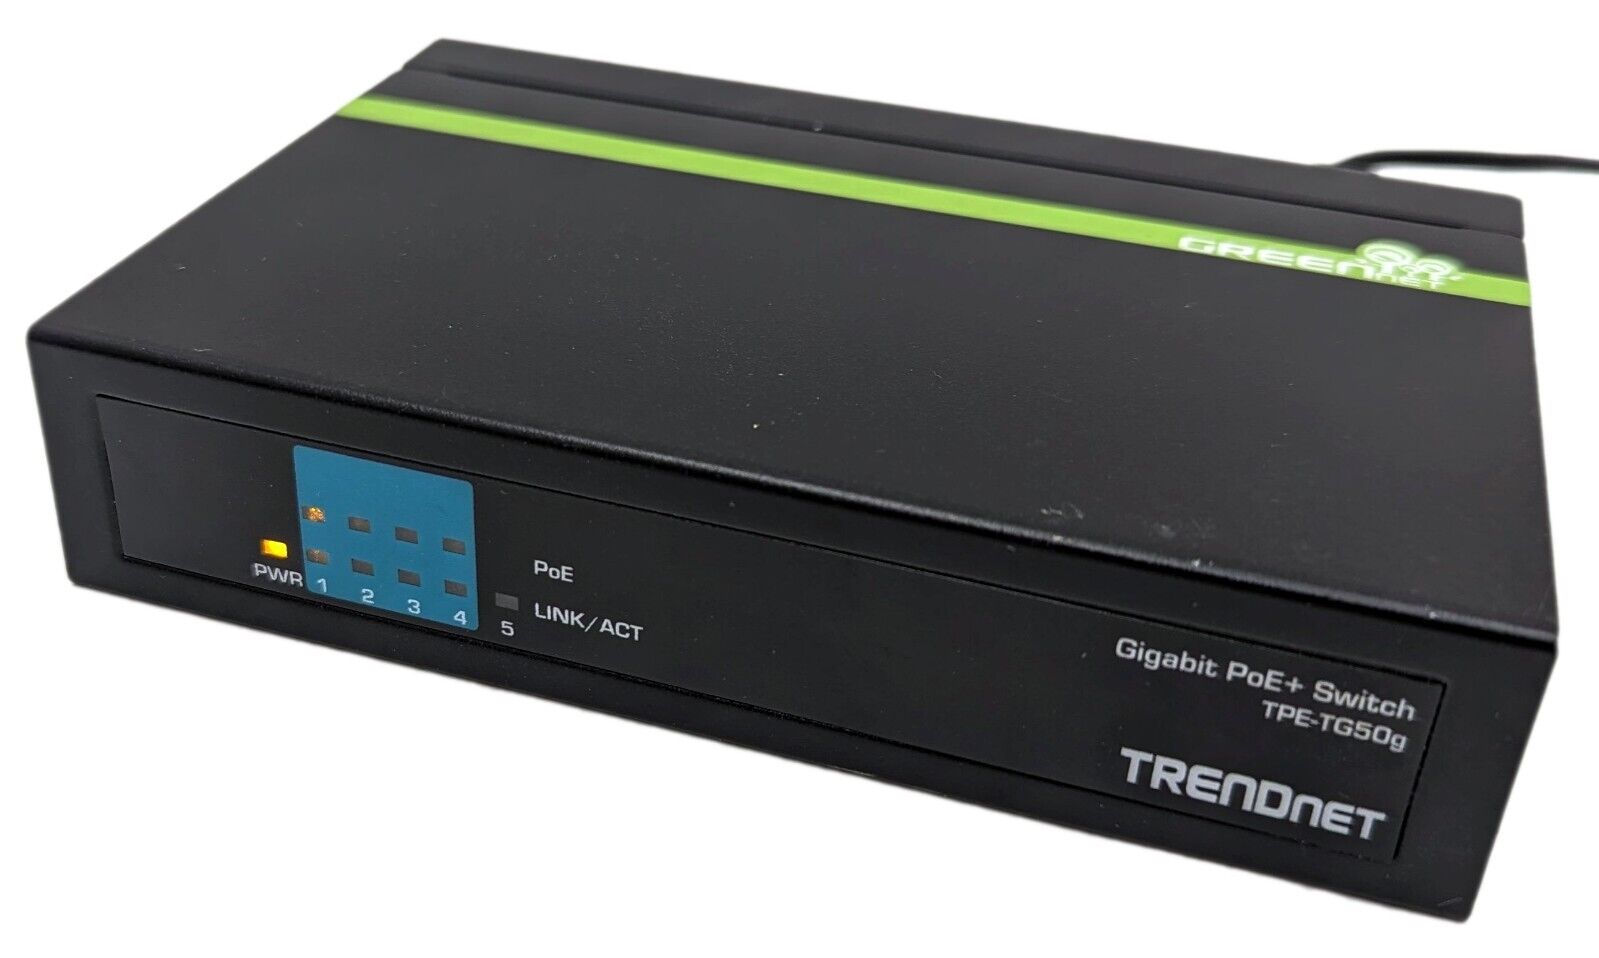 TRENDnet GREENnet TPE-TG50g 5-Port Gigabit Network Switch PoE+ w/ Power Supply